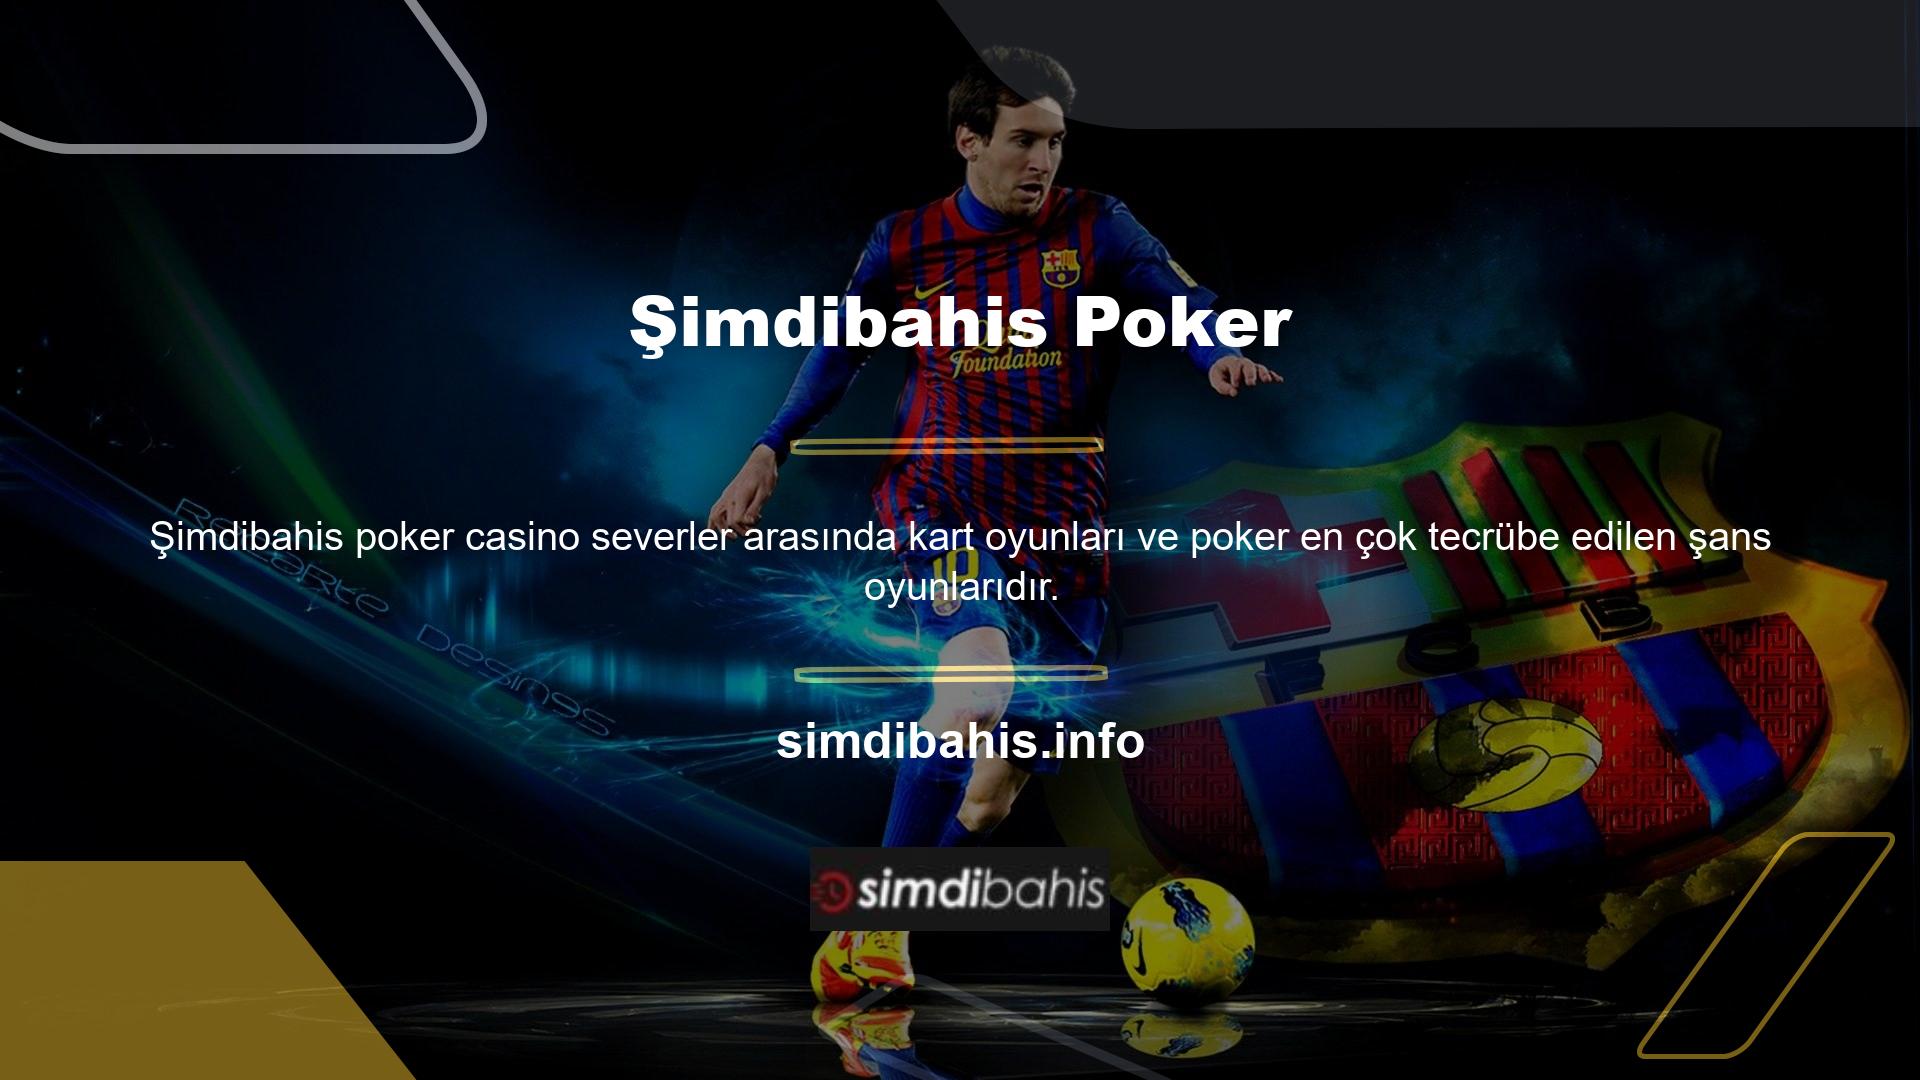 Site Lobby Poker, Casino Hold'em Poker, Teen Patty ve Triple Card Poker gibi oyunlar sunmaktadır